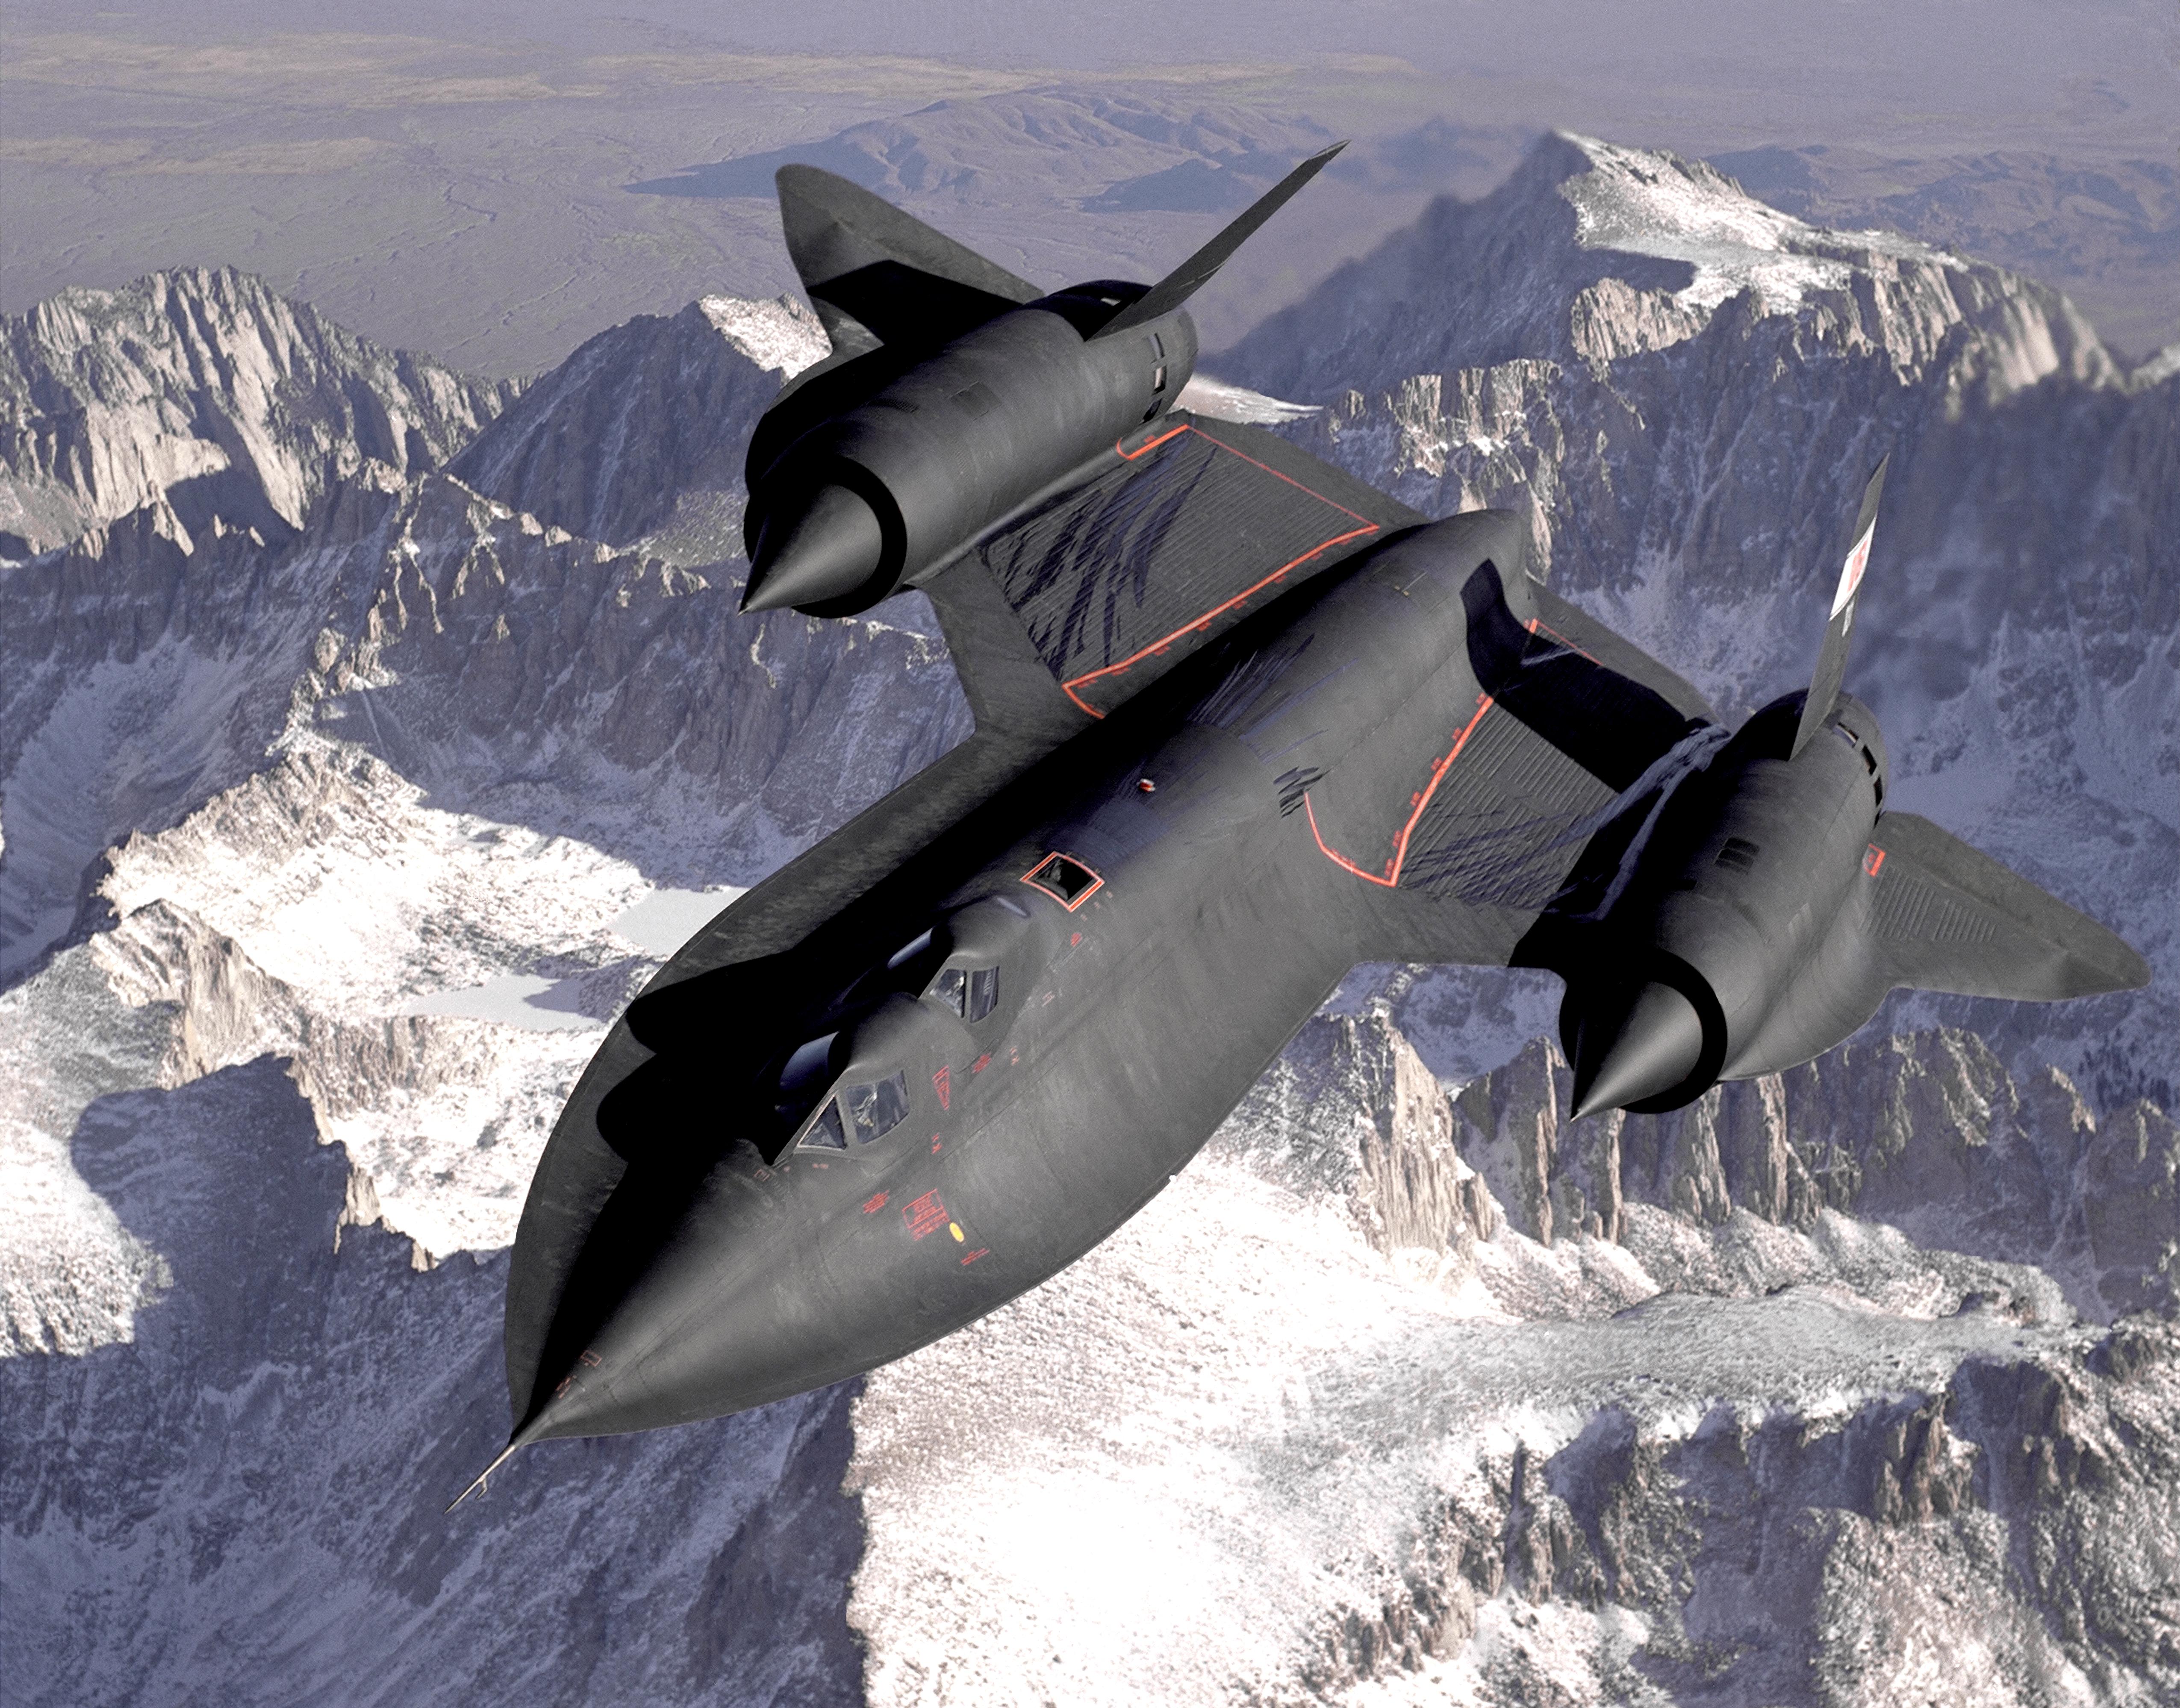 Lockheed SR-71 Blackbird - Wikipedia